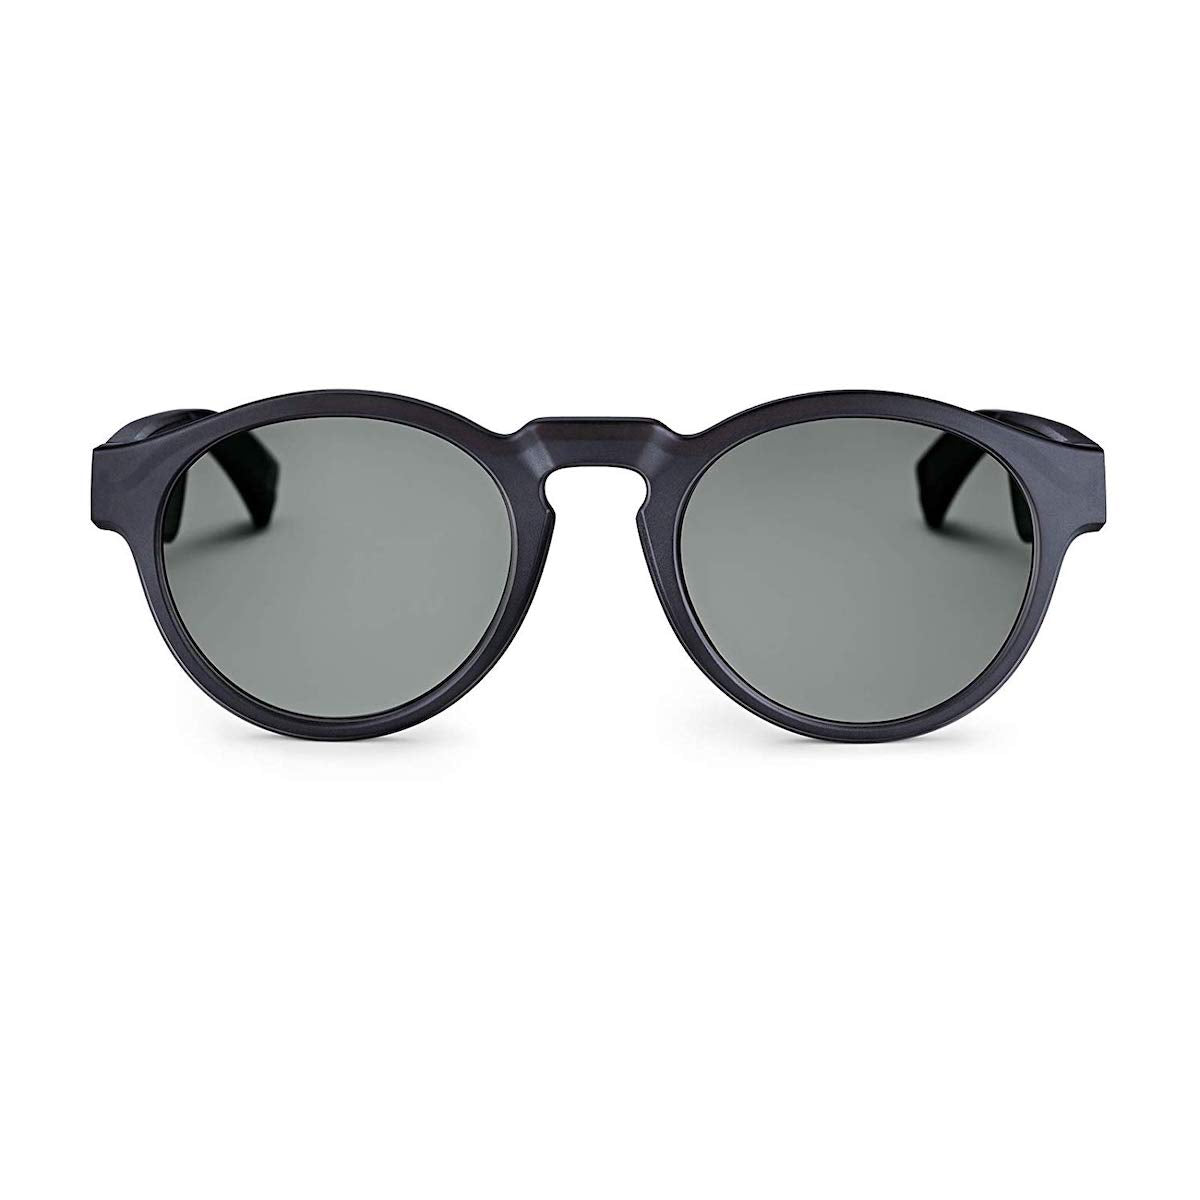 Bose Frames Rondo - Audio Sunglasses - AVStore